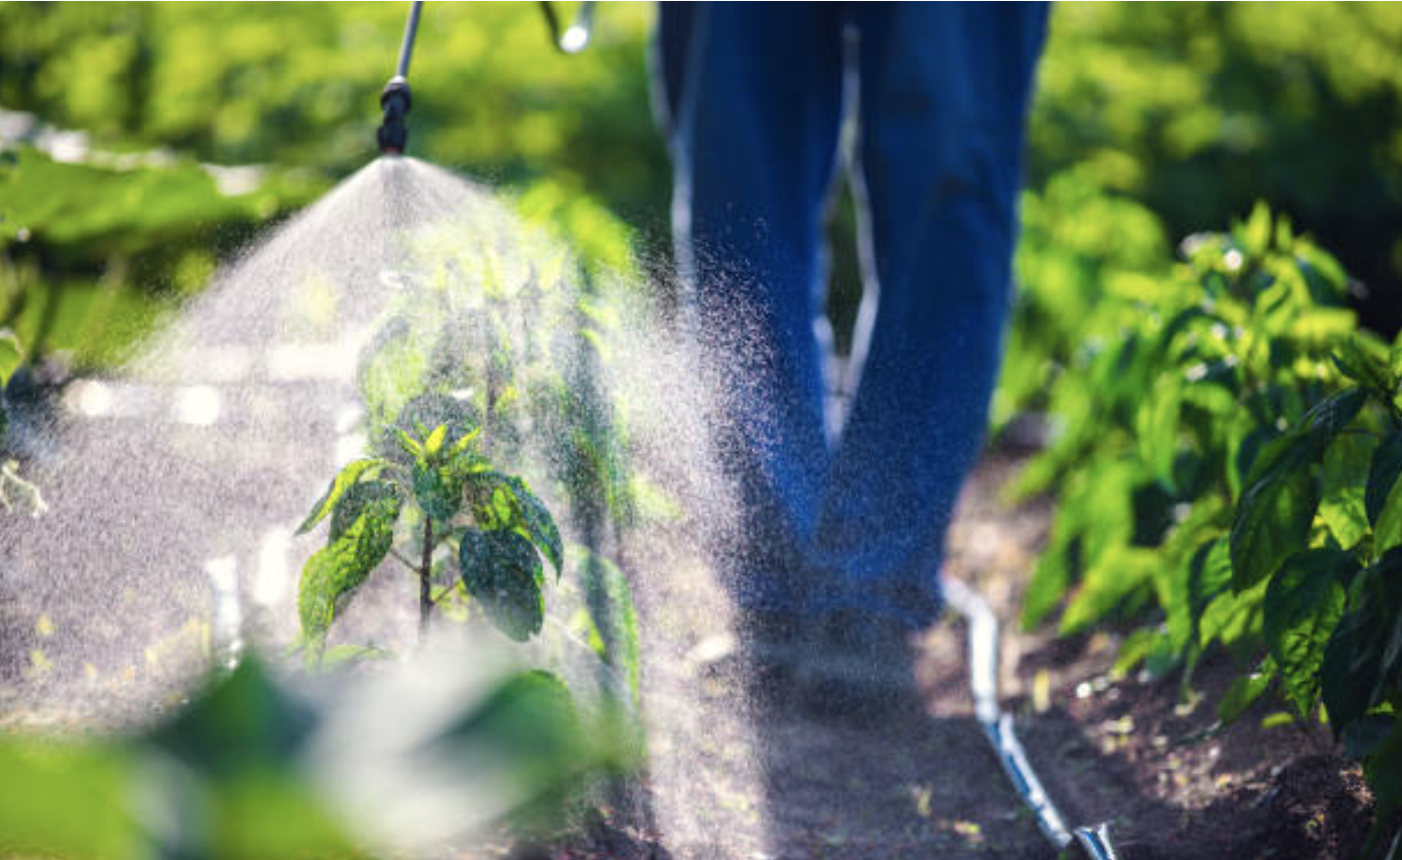 How to get a private pesticide applicator license by Mario Villarino